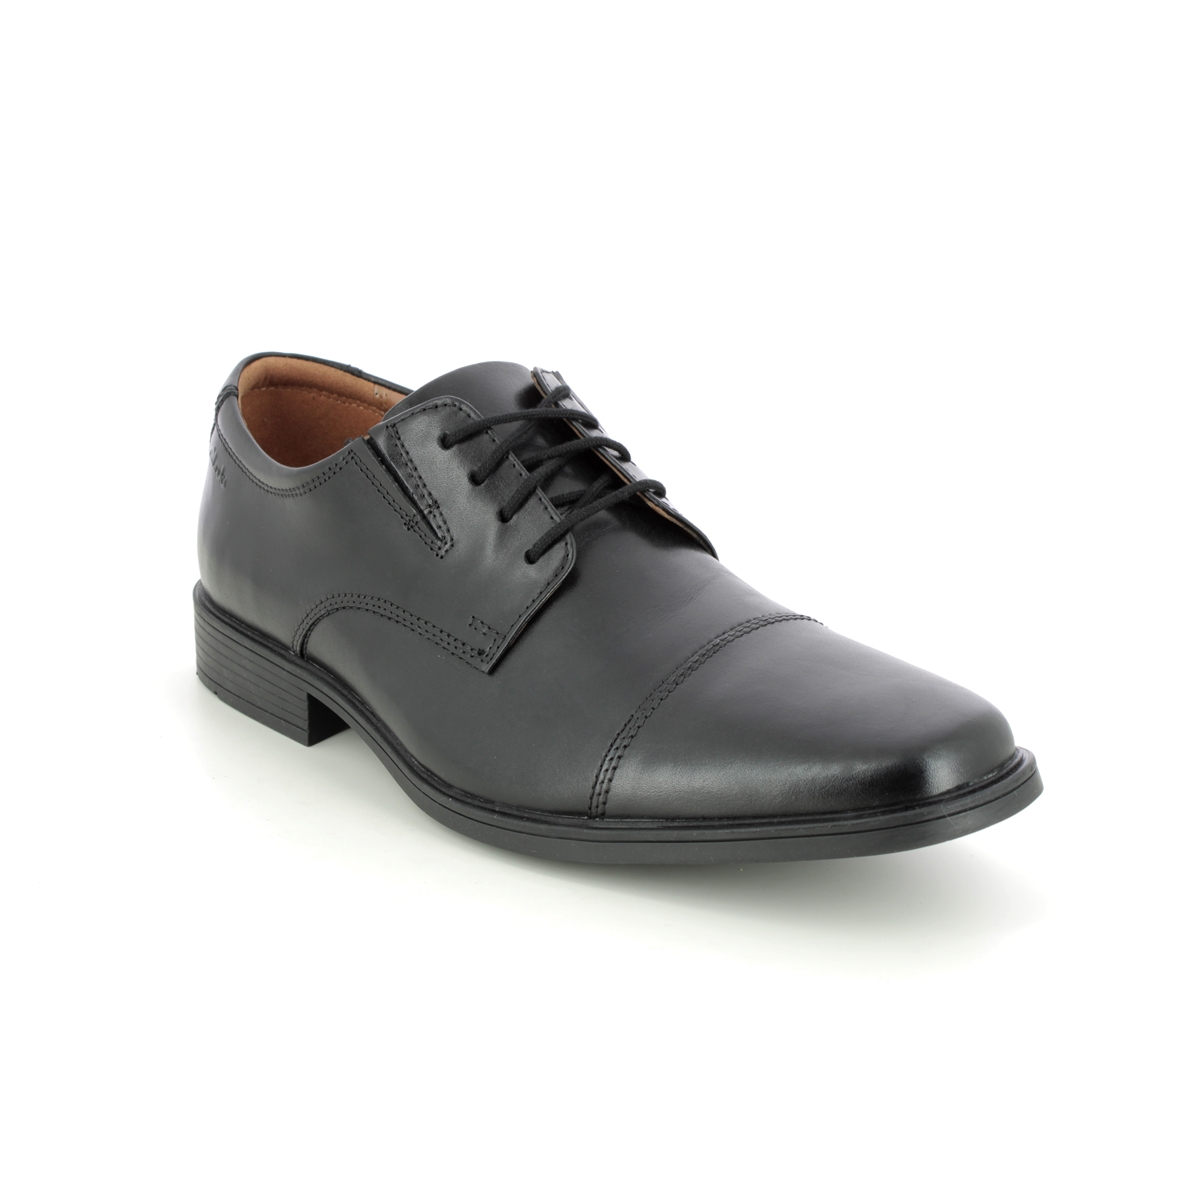 Clarks Tilden Cap Black Leather Mens Formal Shoes 103097G In Size 12 In Plain Black Leather G Width Fitting